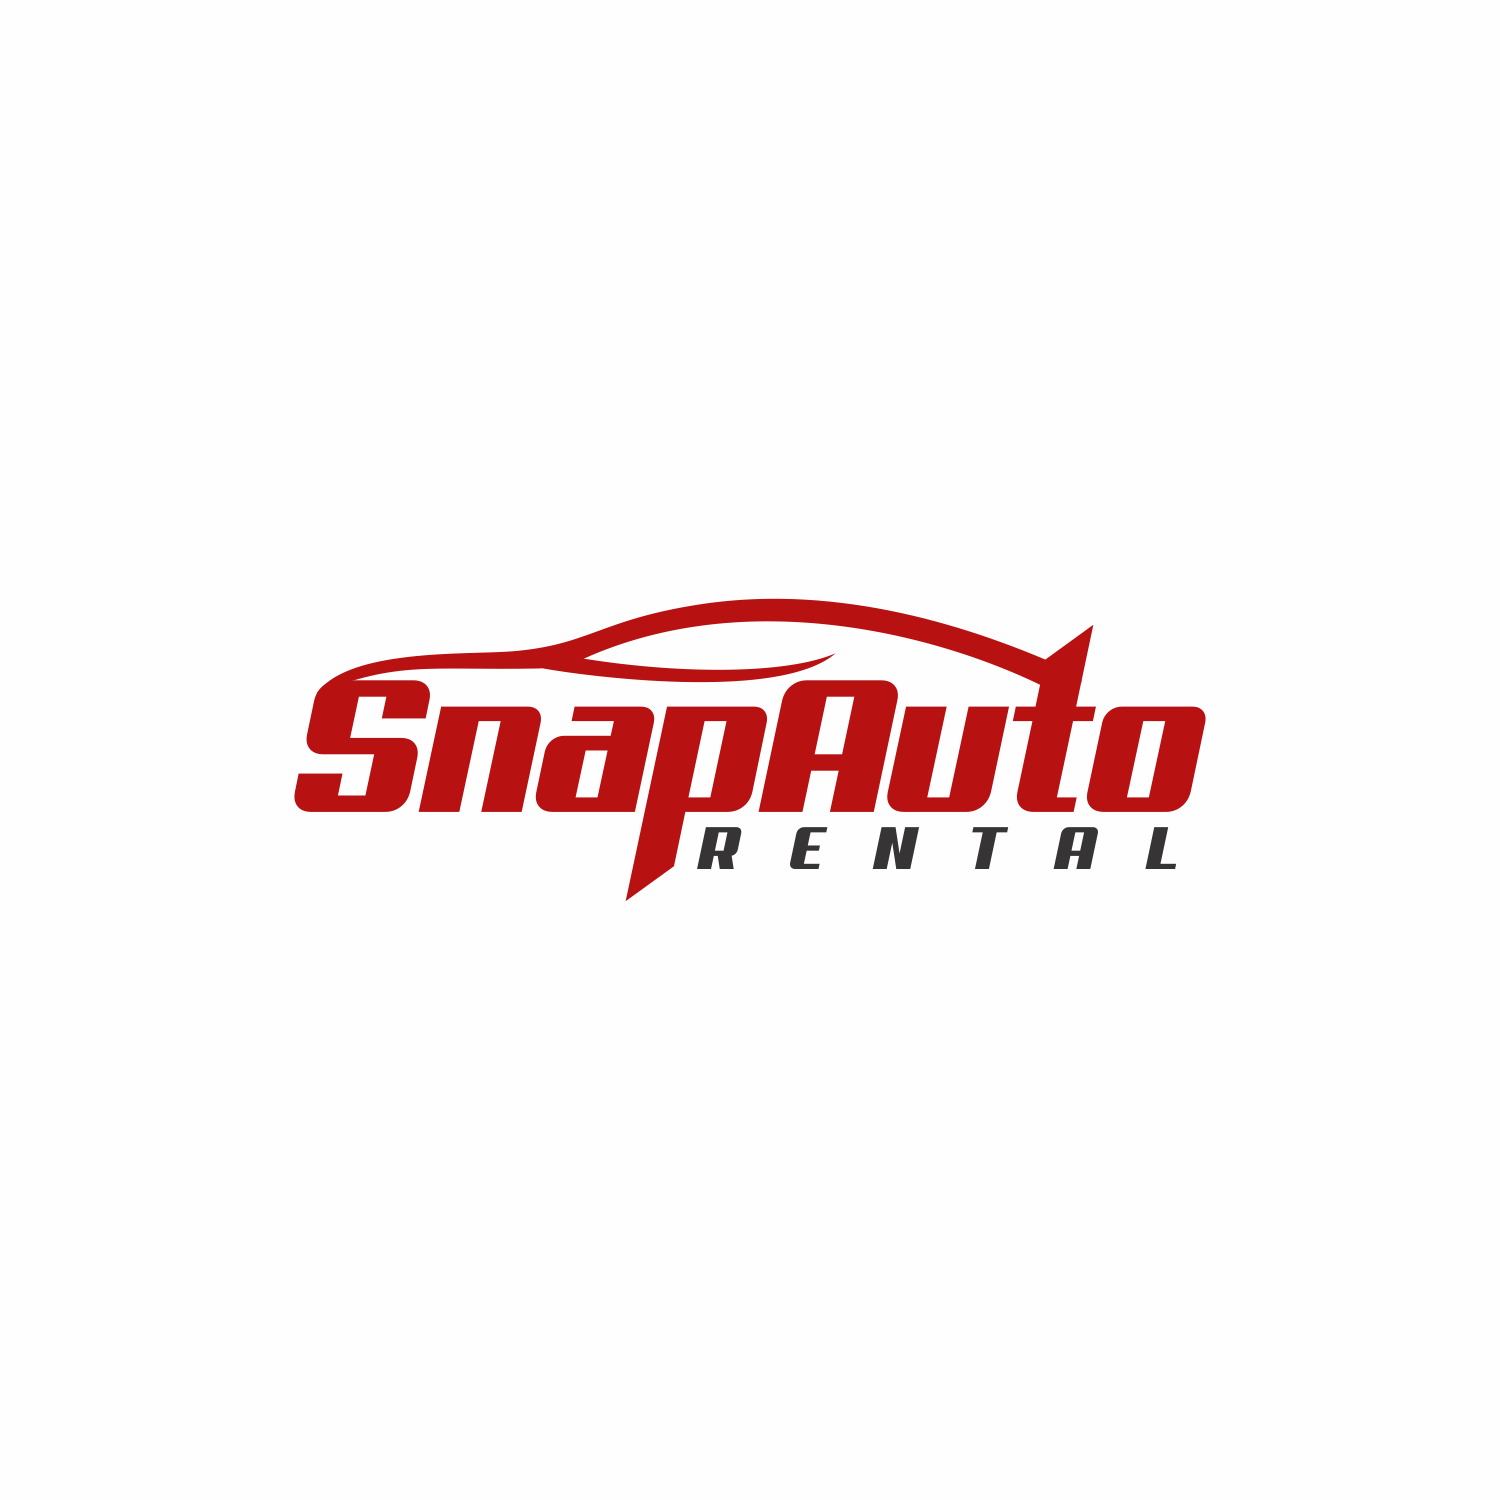 Red Rental Logo - Elegant, Playful, Car Rental Logo Design for Snap Auto Rental by ...